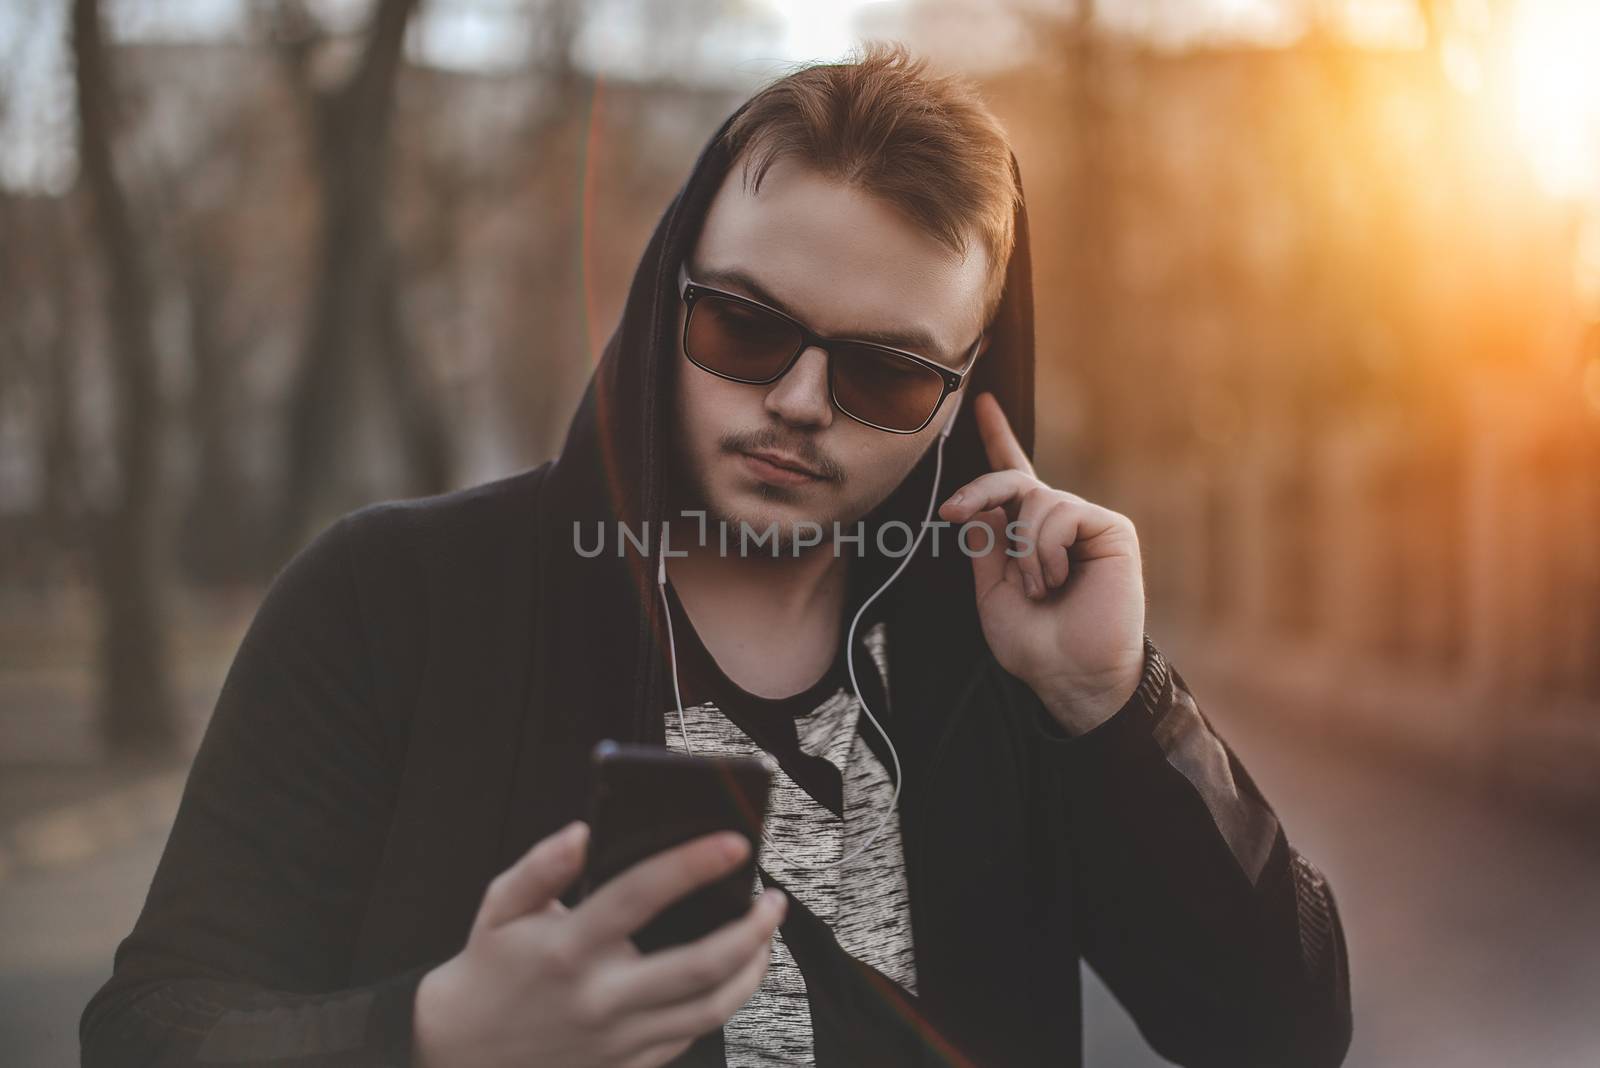 Man in Hood with headphones looking at smartphone.